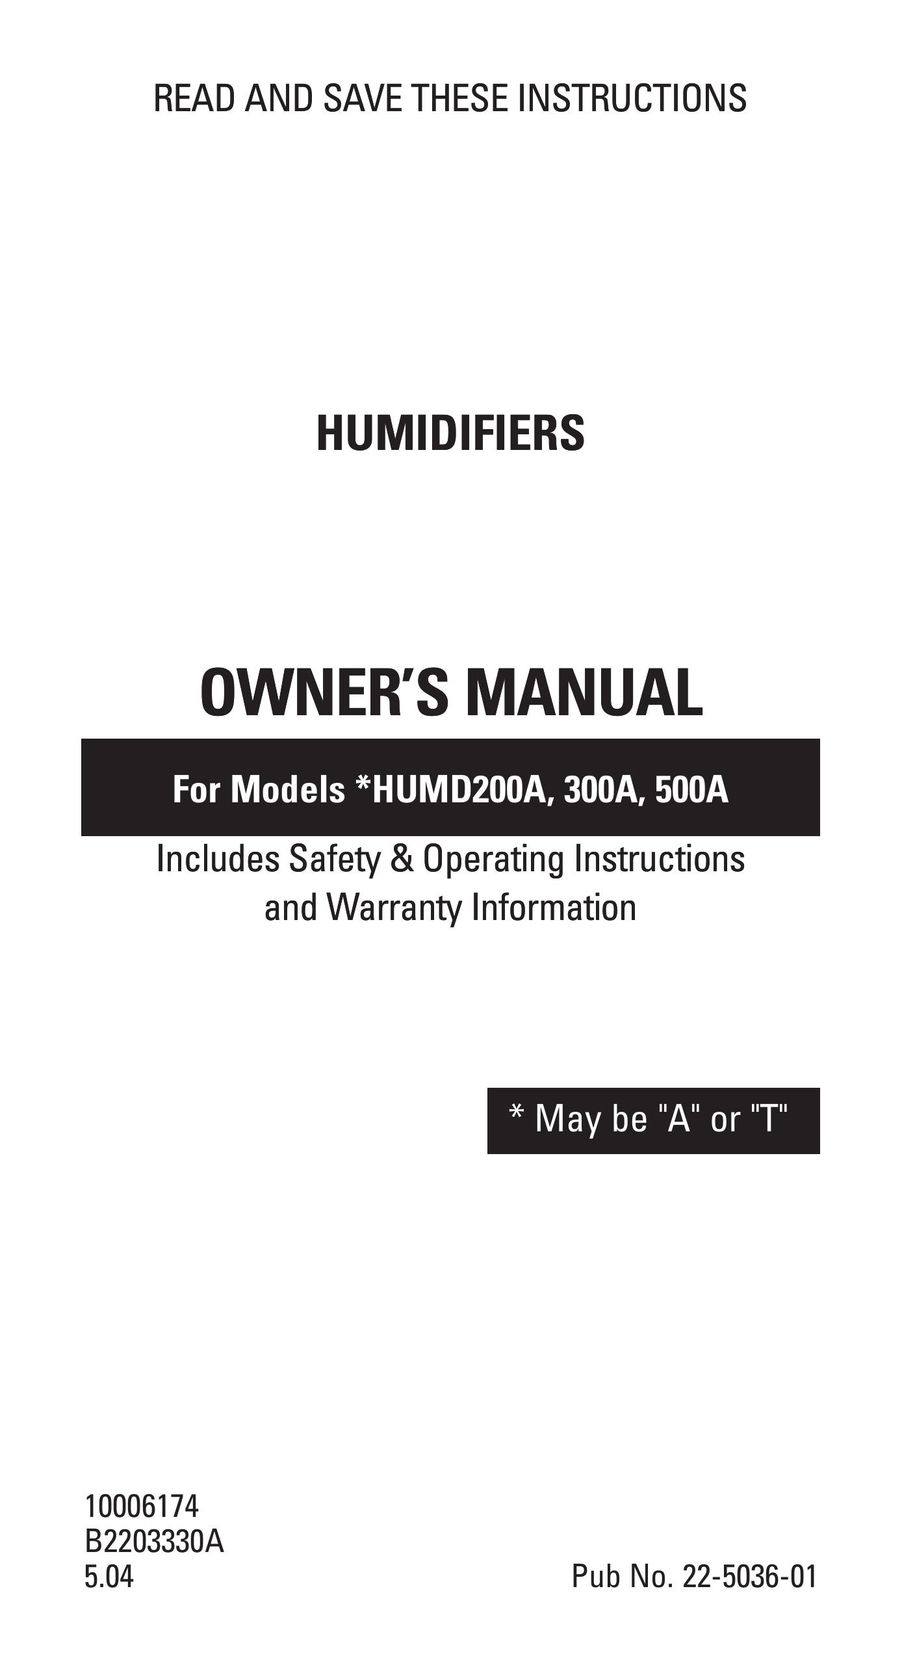 American Standard 300A Humidifier User Manual